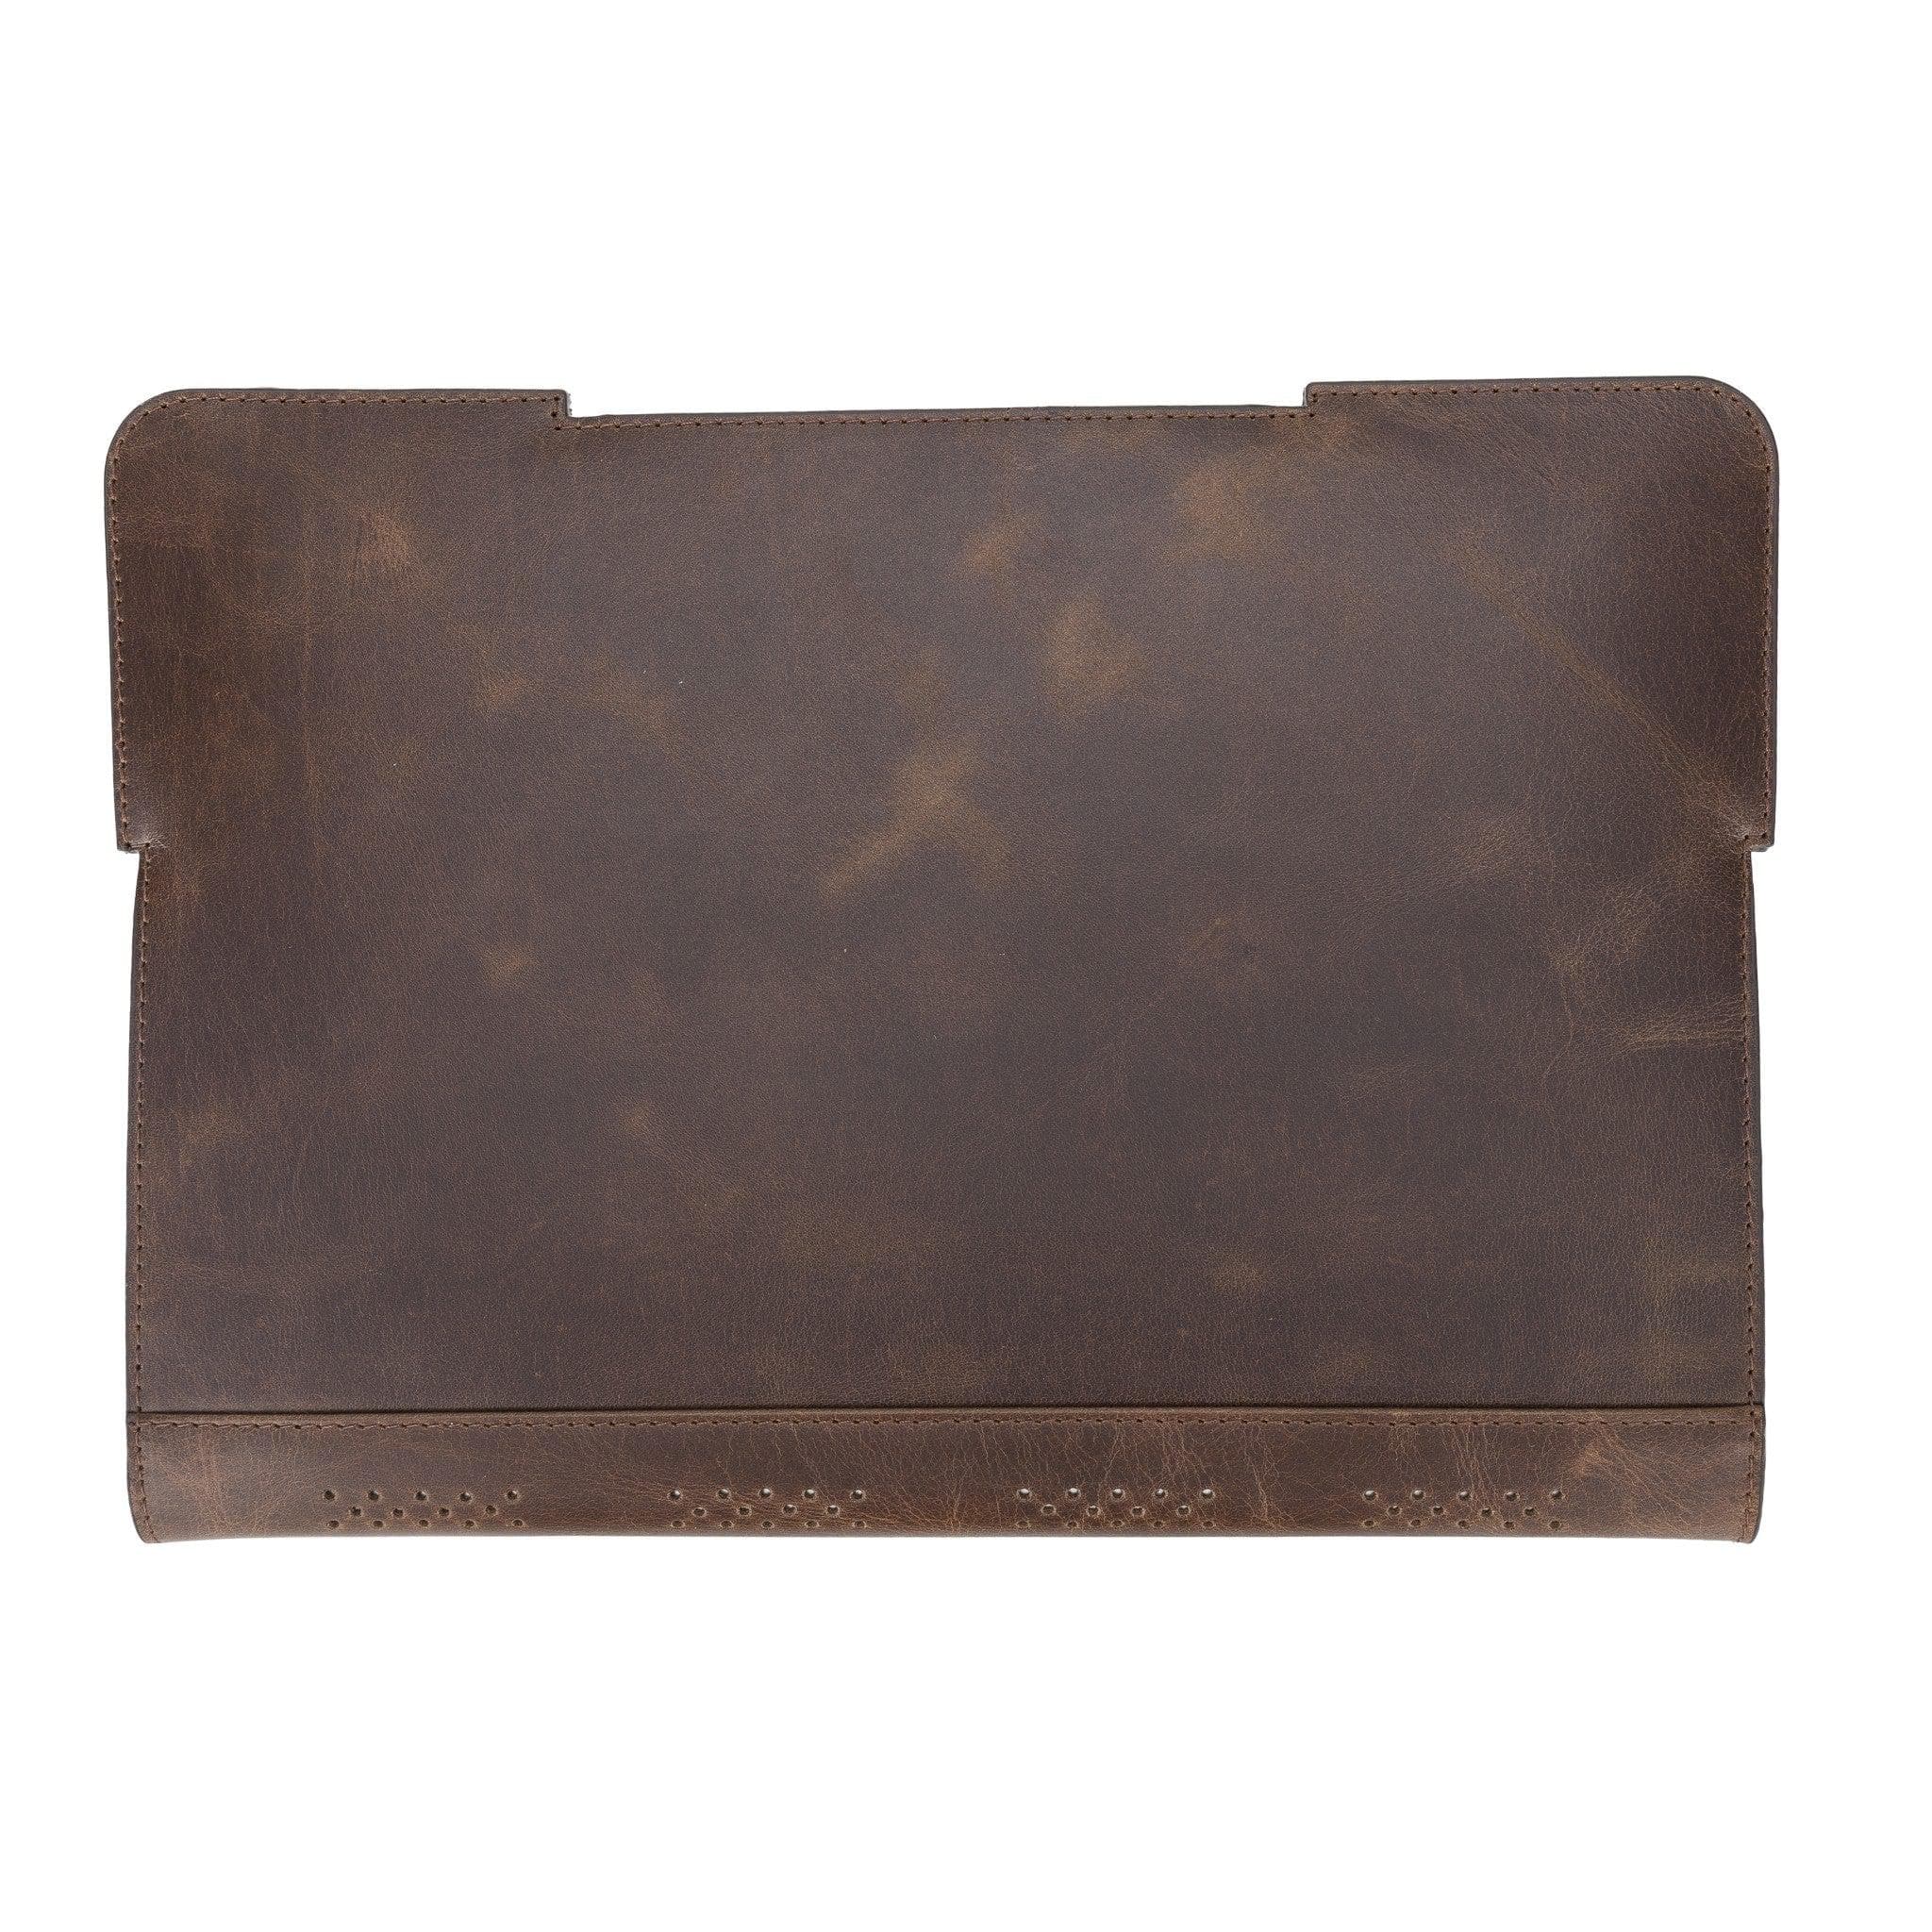 Genuine Leather iPad and MacBook Sleeves